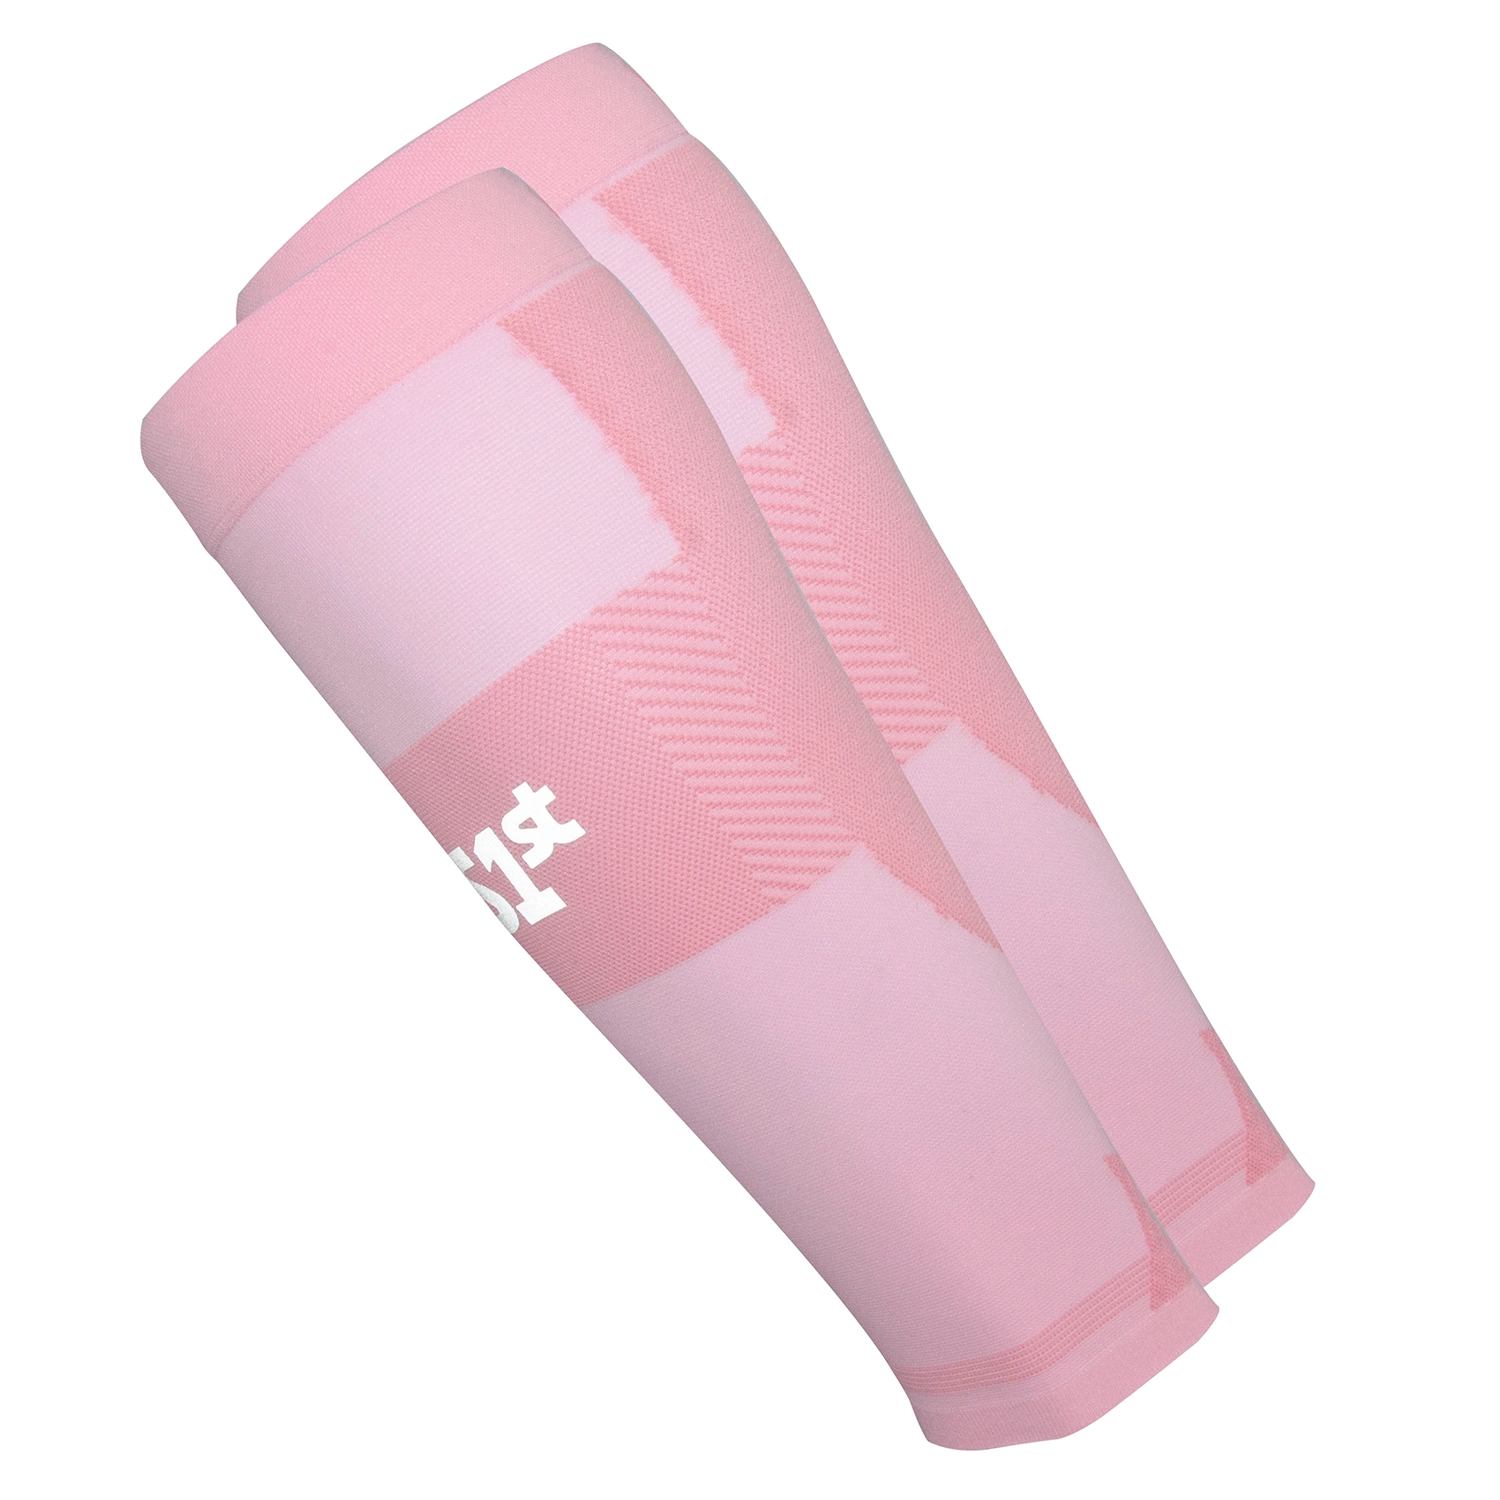 TA6 Thin air calf sleeves in light pink | OS1st